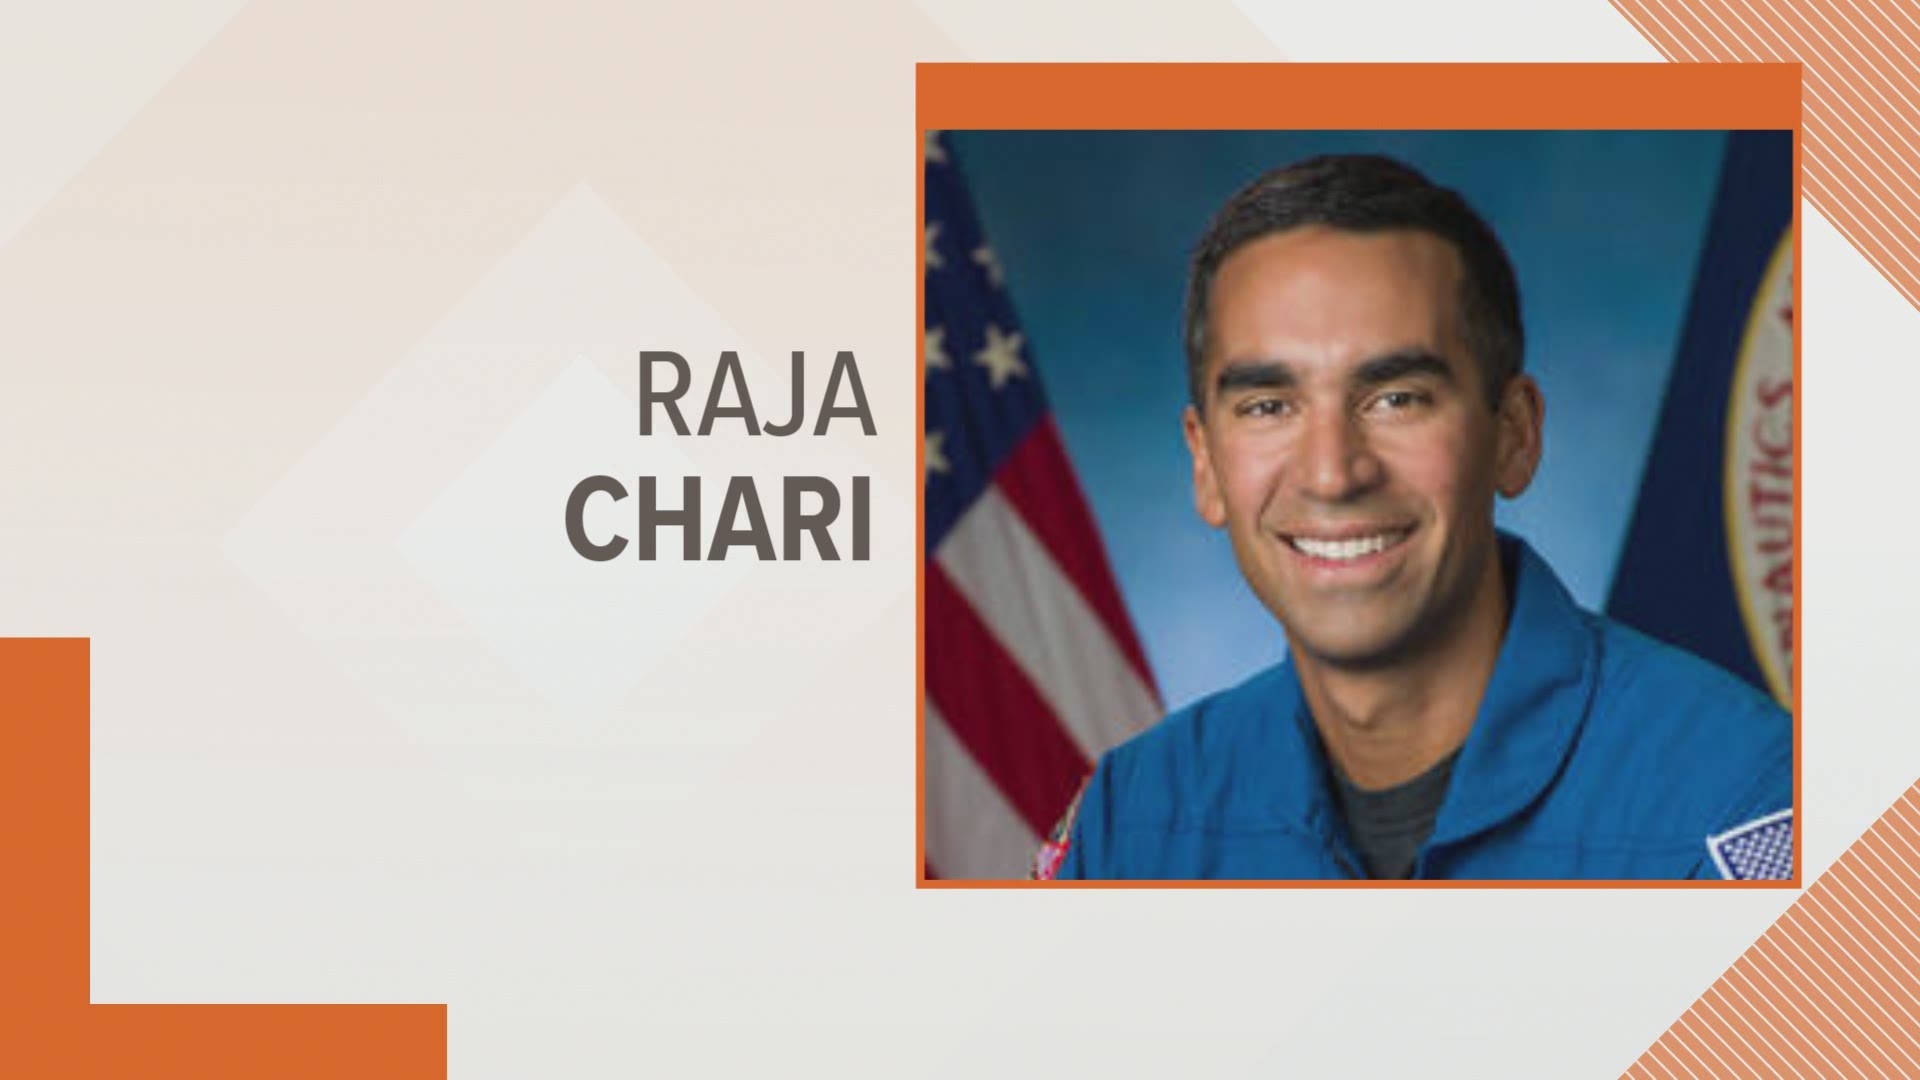 Raja Chari, who was raised in Cedar Falls, graduated from Columbus High School in Waterloo.